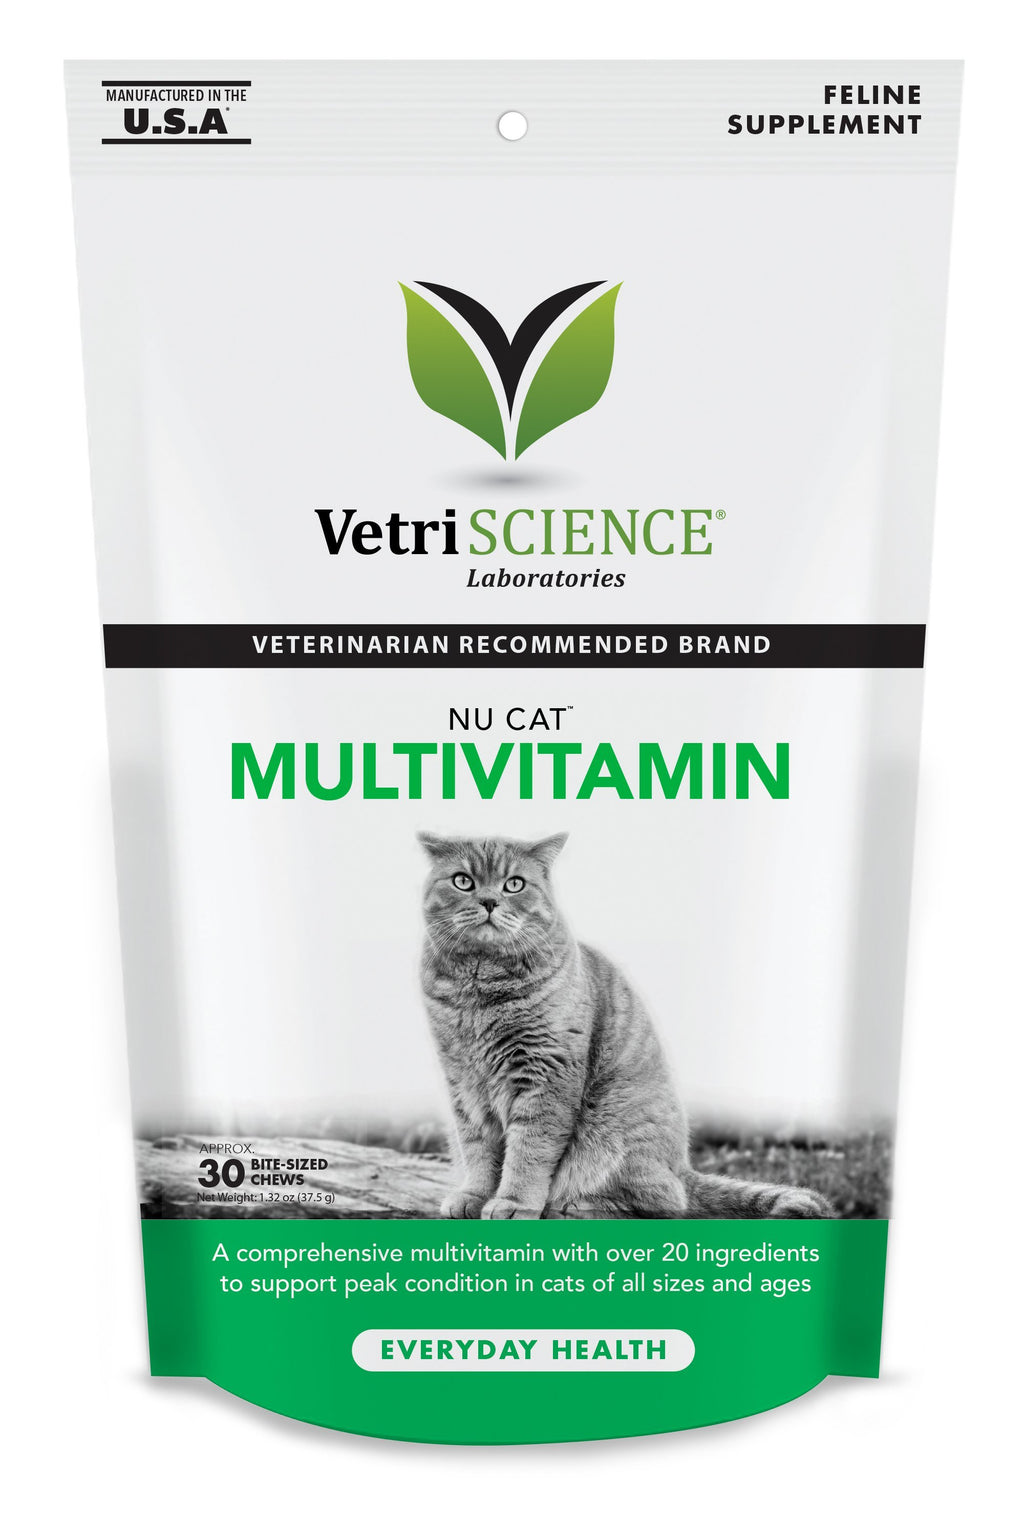 Vetriscience Labs NuCat MultiVitamin Chewable Cat Supplements - 30 ct Pouch  